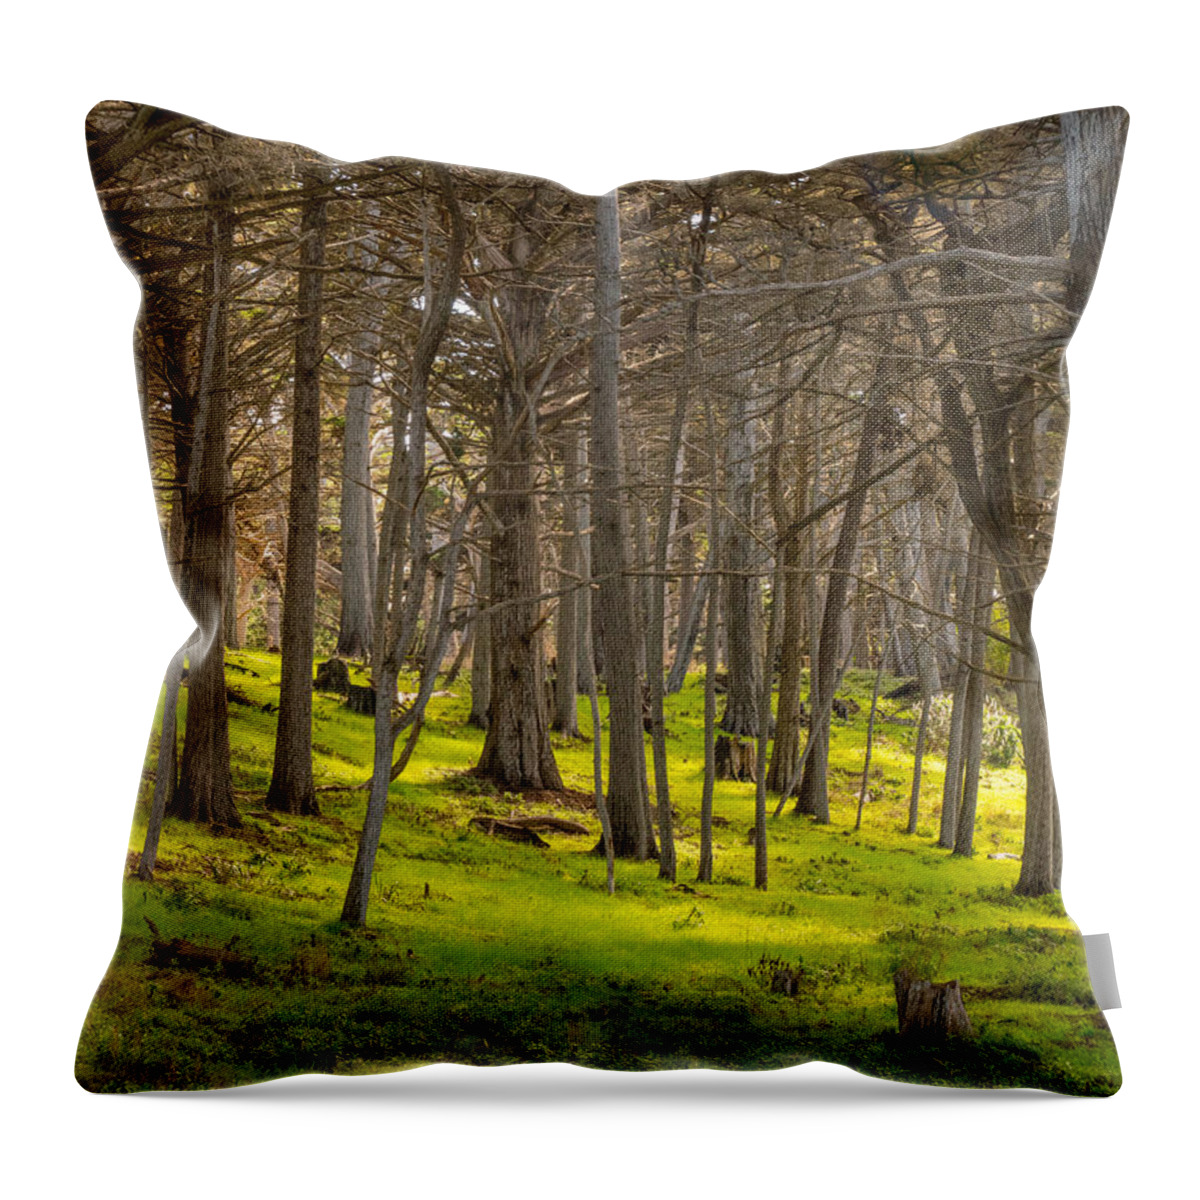 Forest Throw Pillow featuring the photograph Cypress Grove by Derek Dean